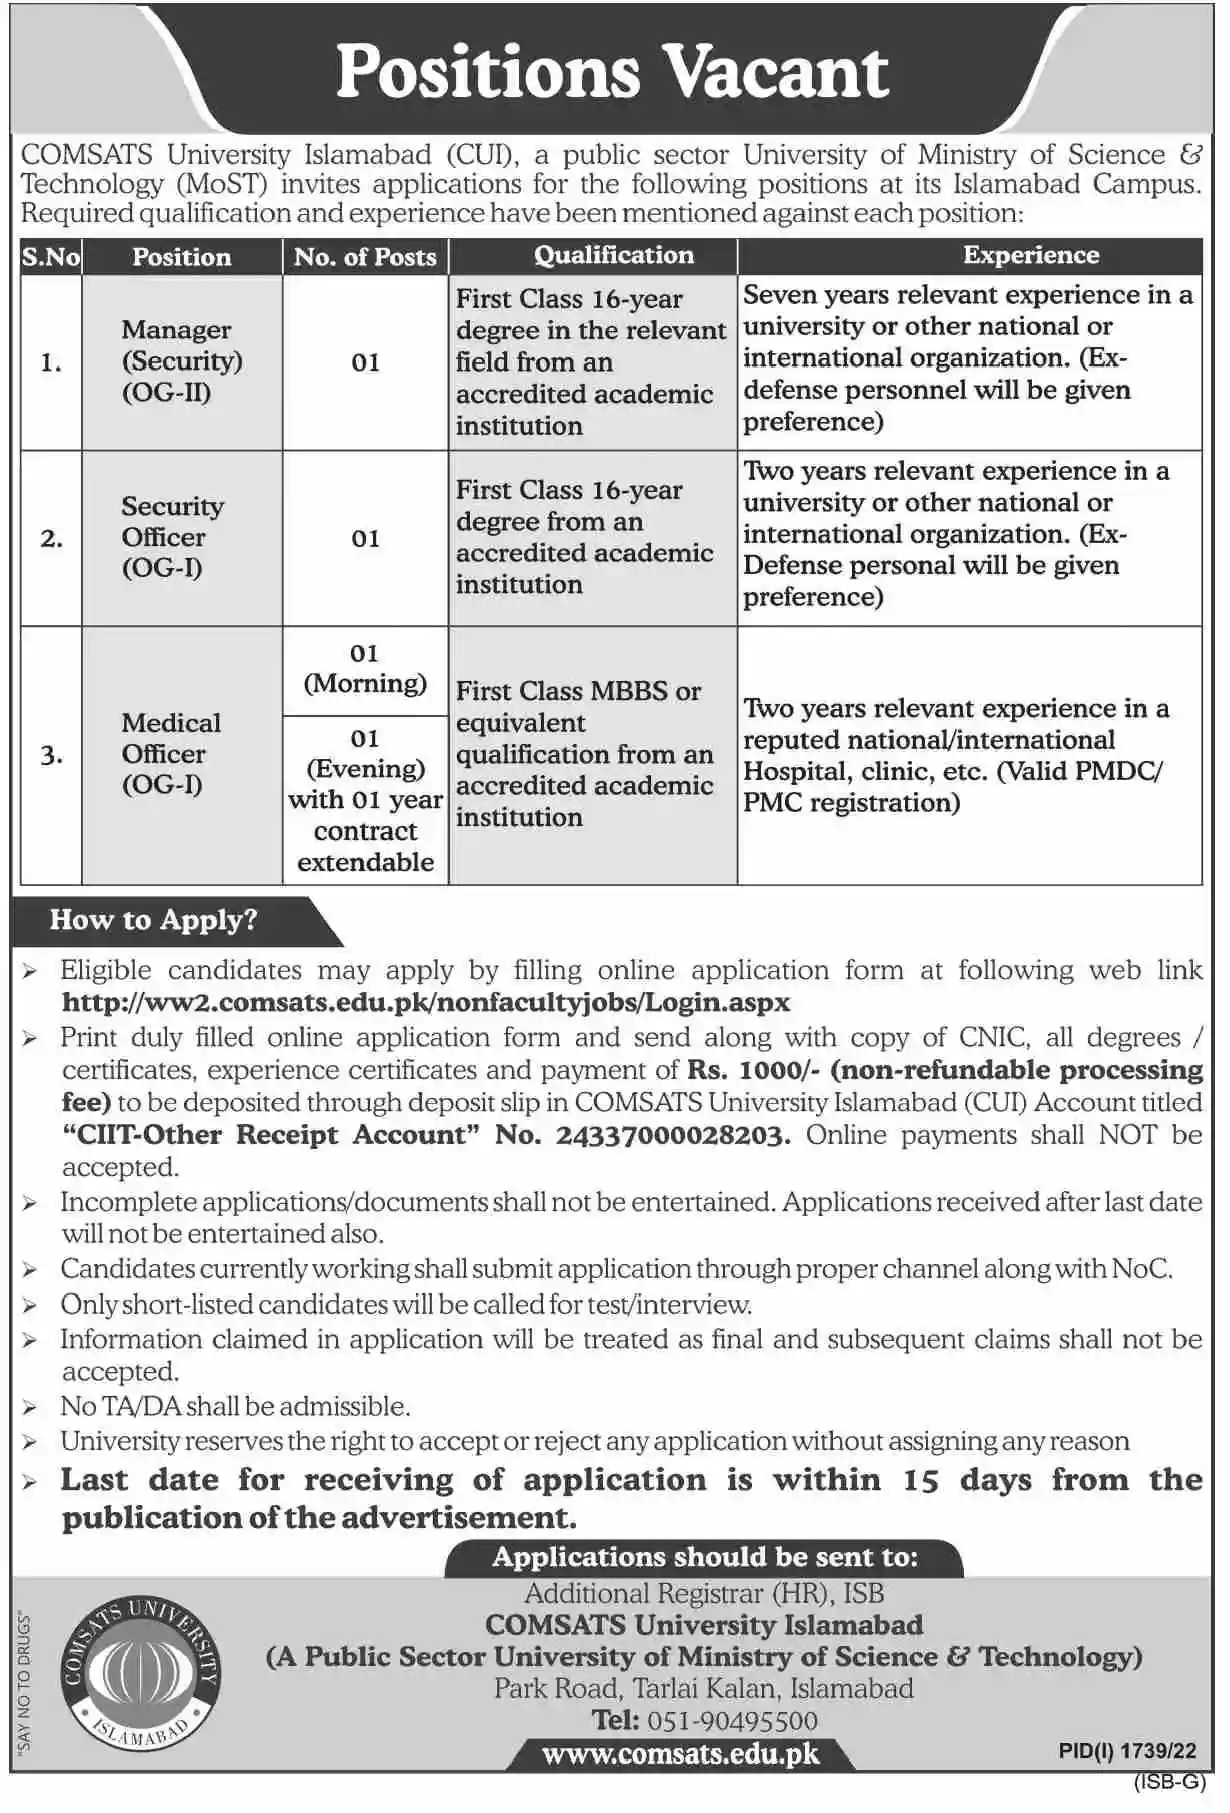 COMSATS-University-Islamabad-CUI-Jobs-2022-Apply-Online-Latest